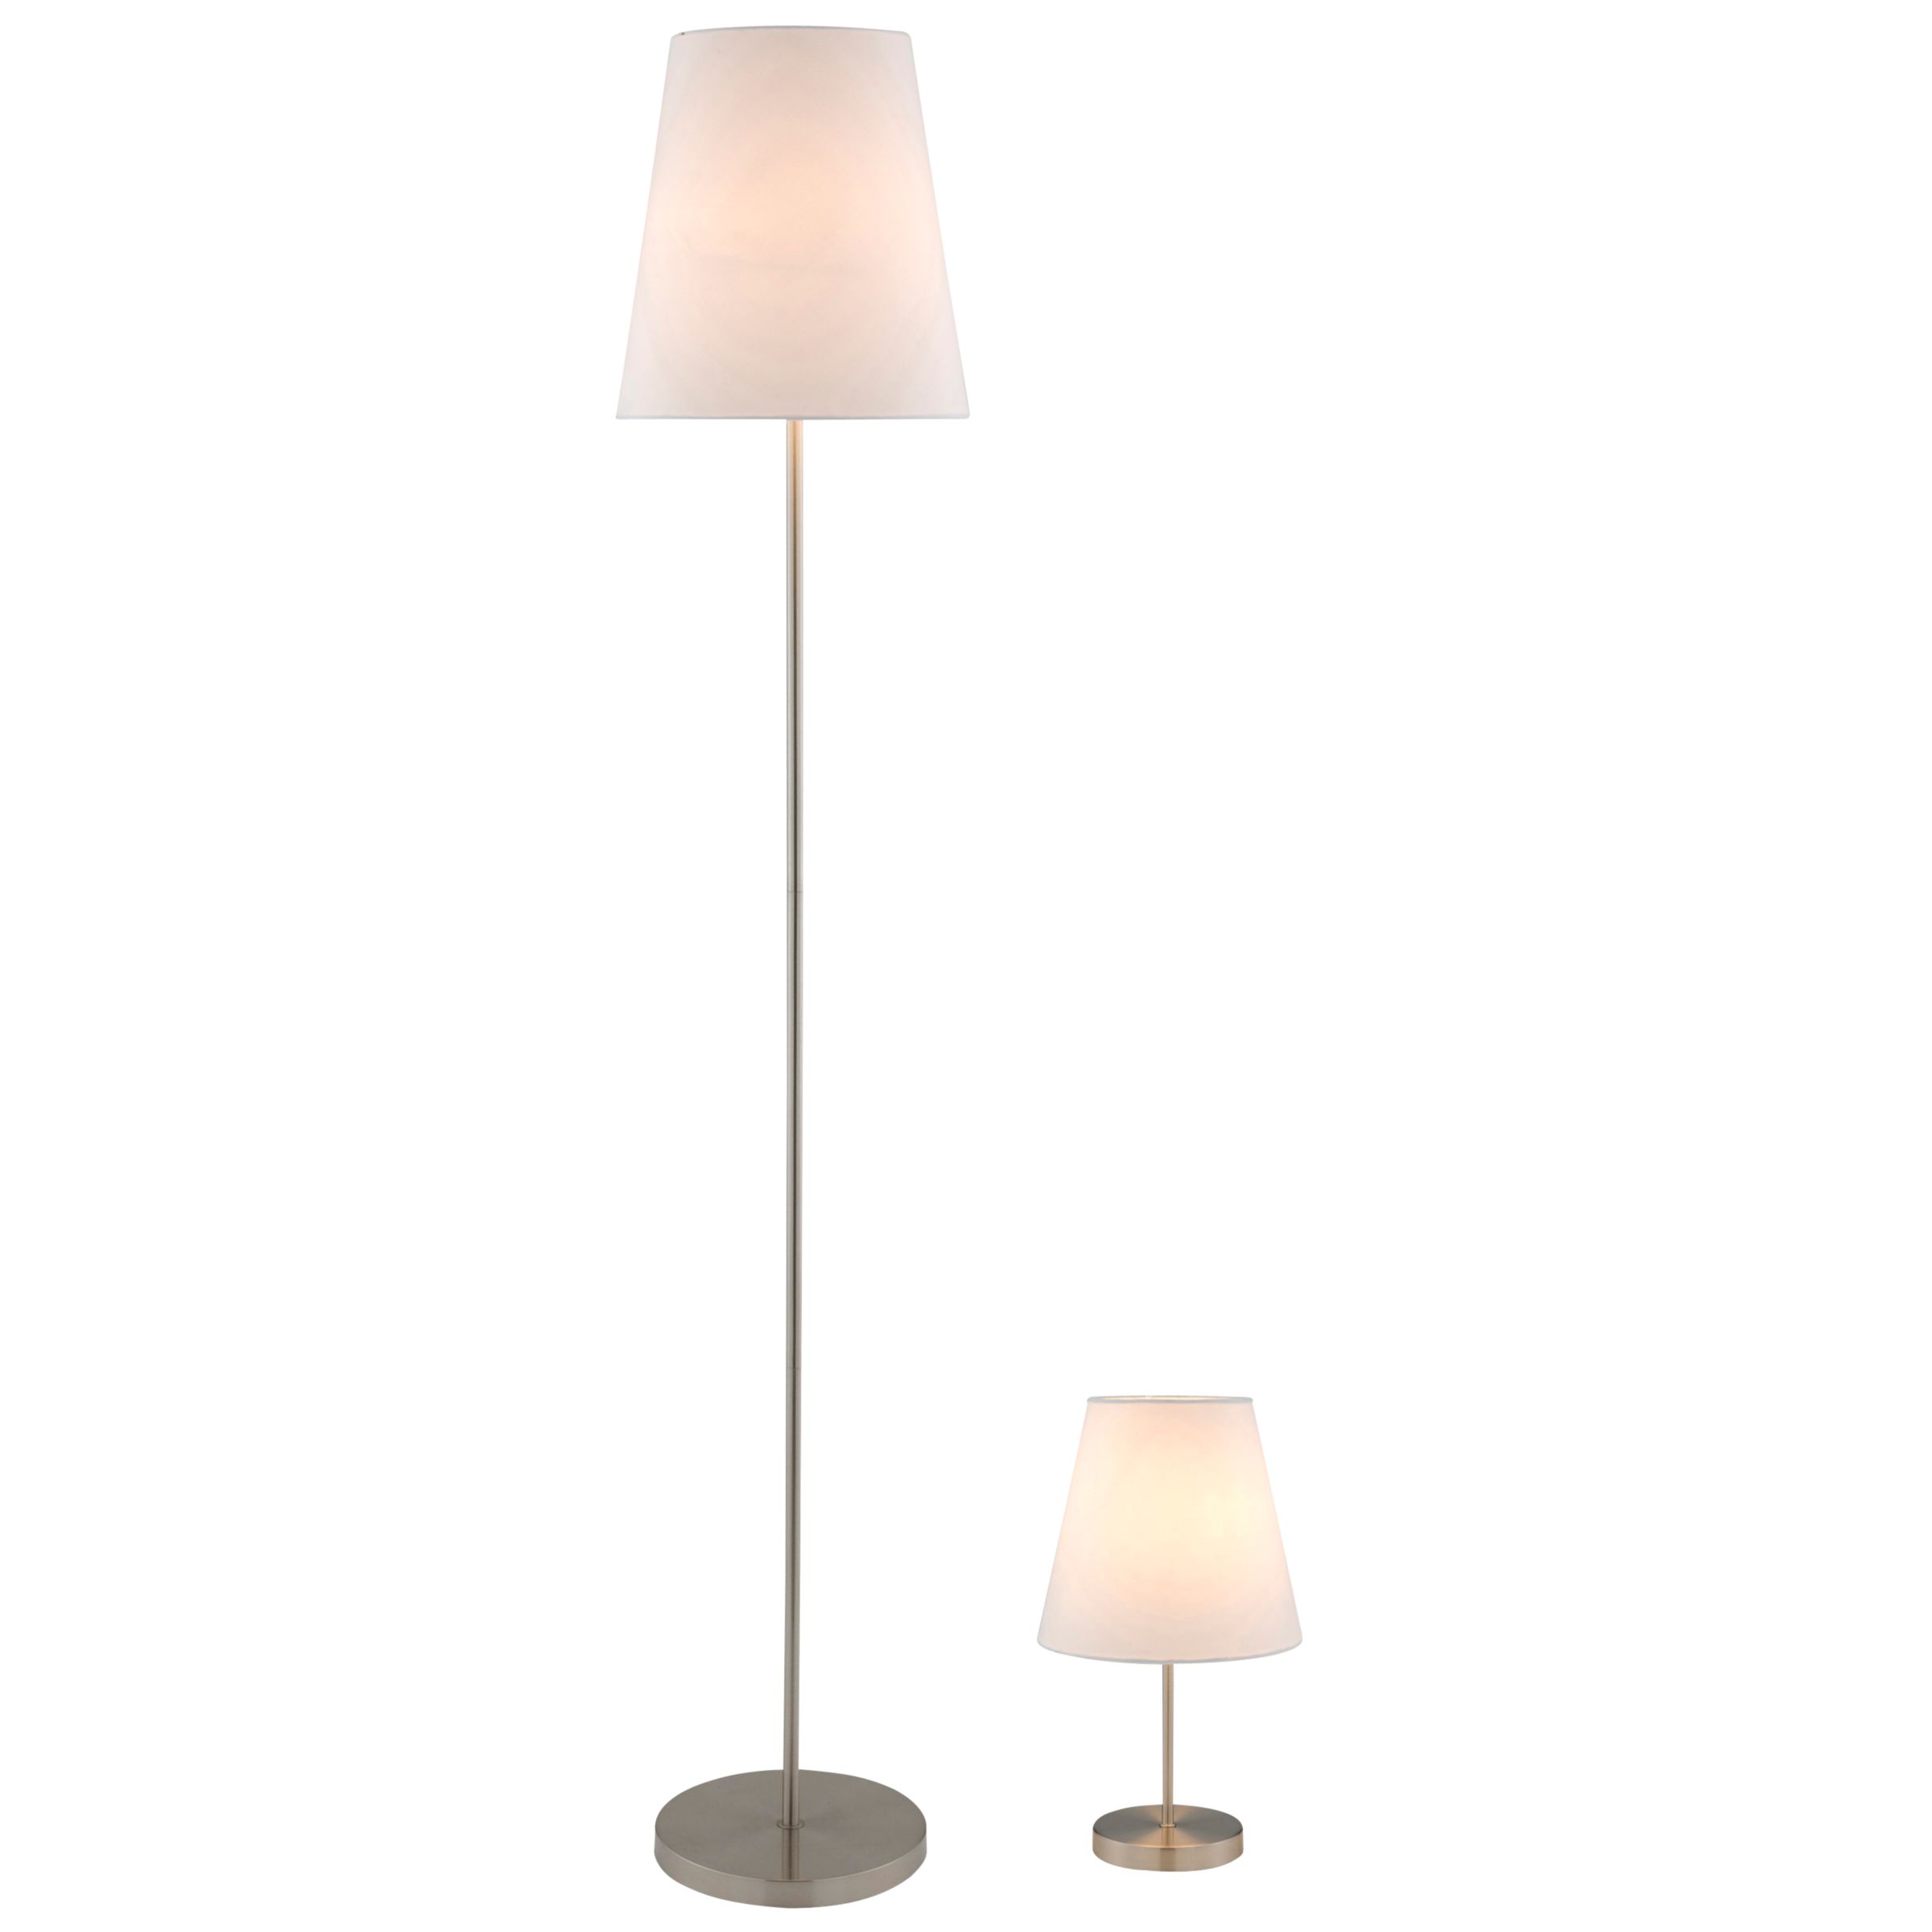 Shivanl Table and Floor Lamp Duo